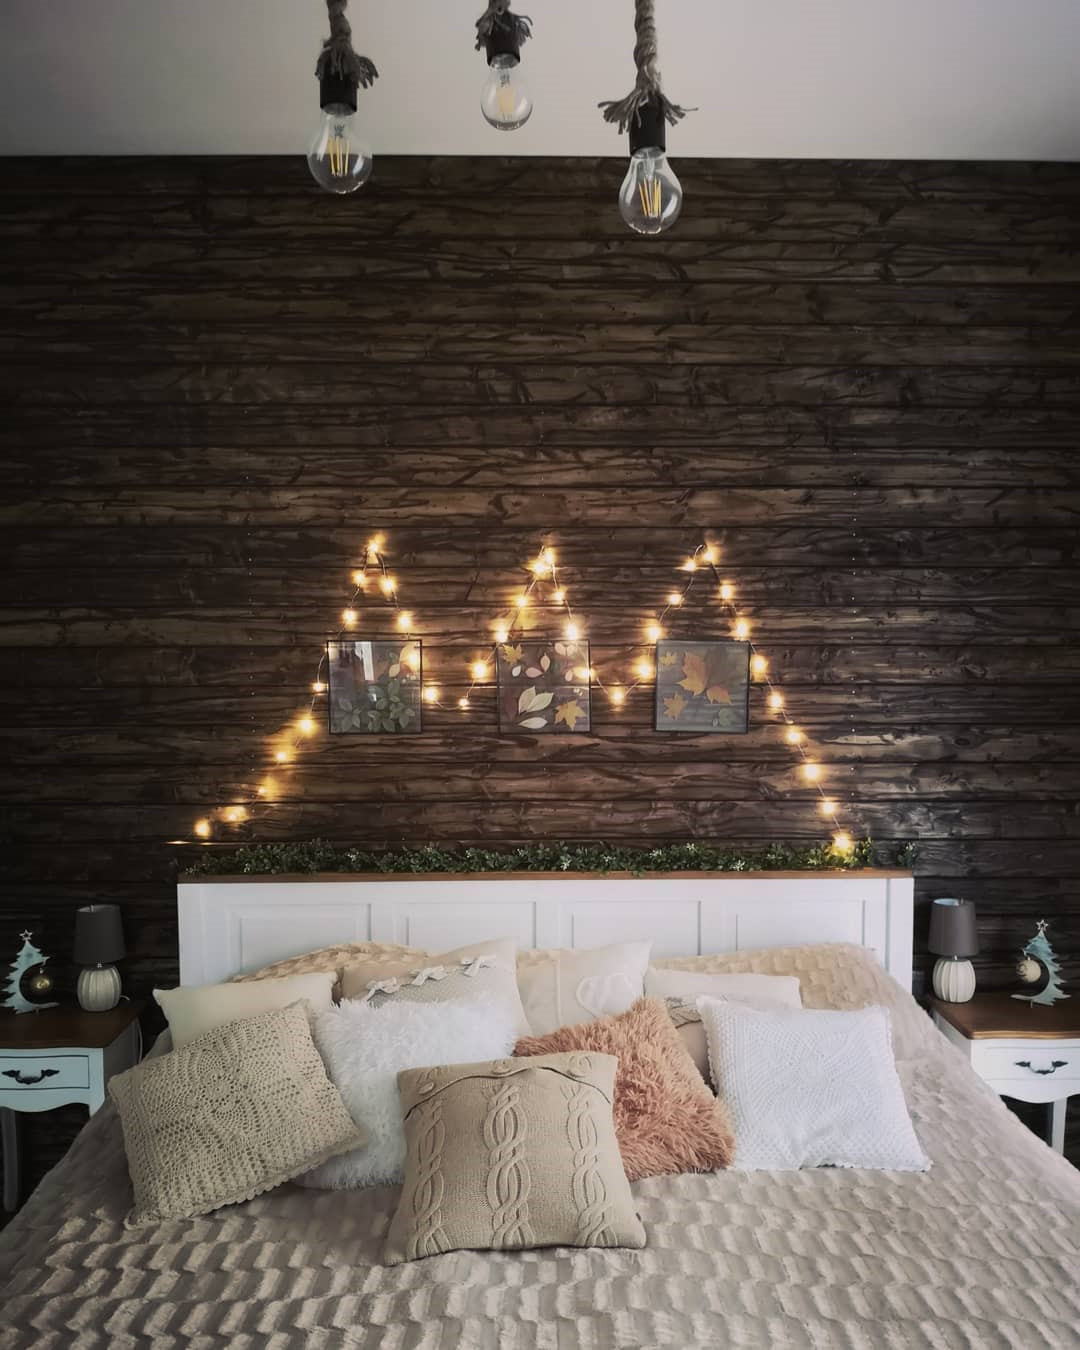 35 Inspiring Christmas Bedroom Decorating Ideas